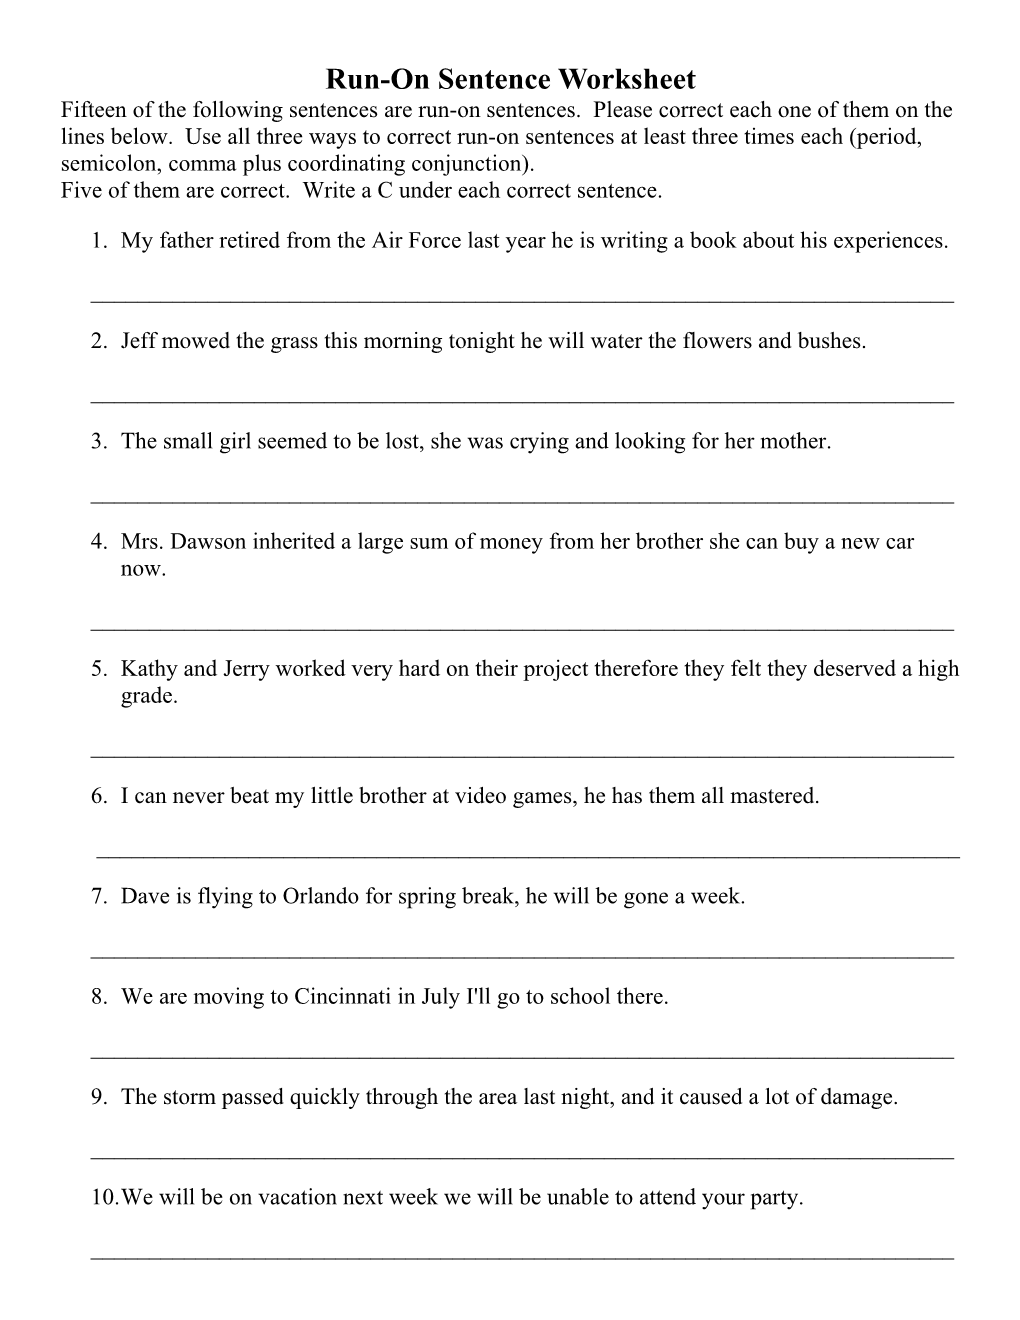 Run-On Sentence Worksheet